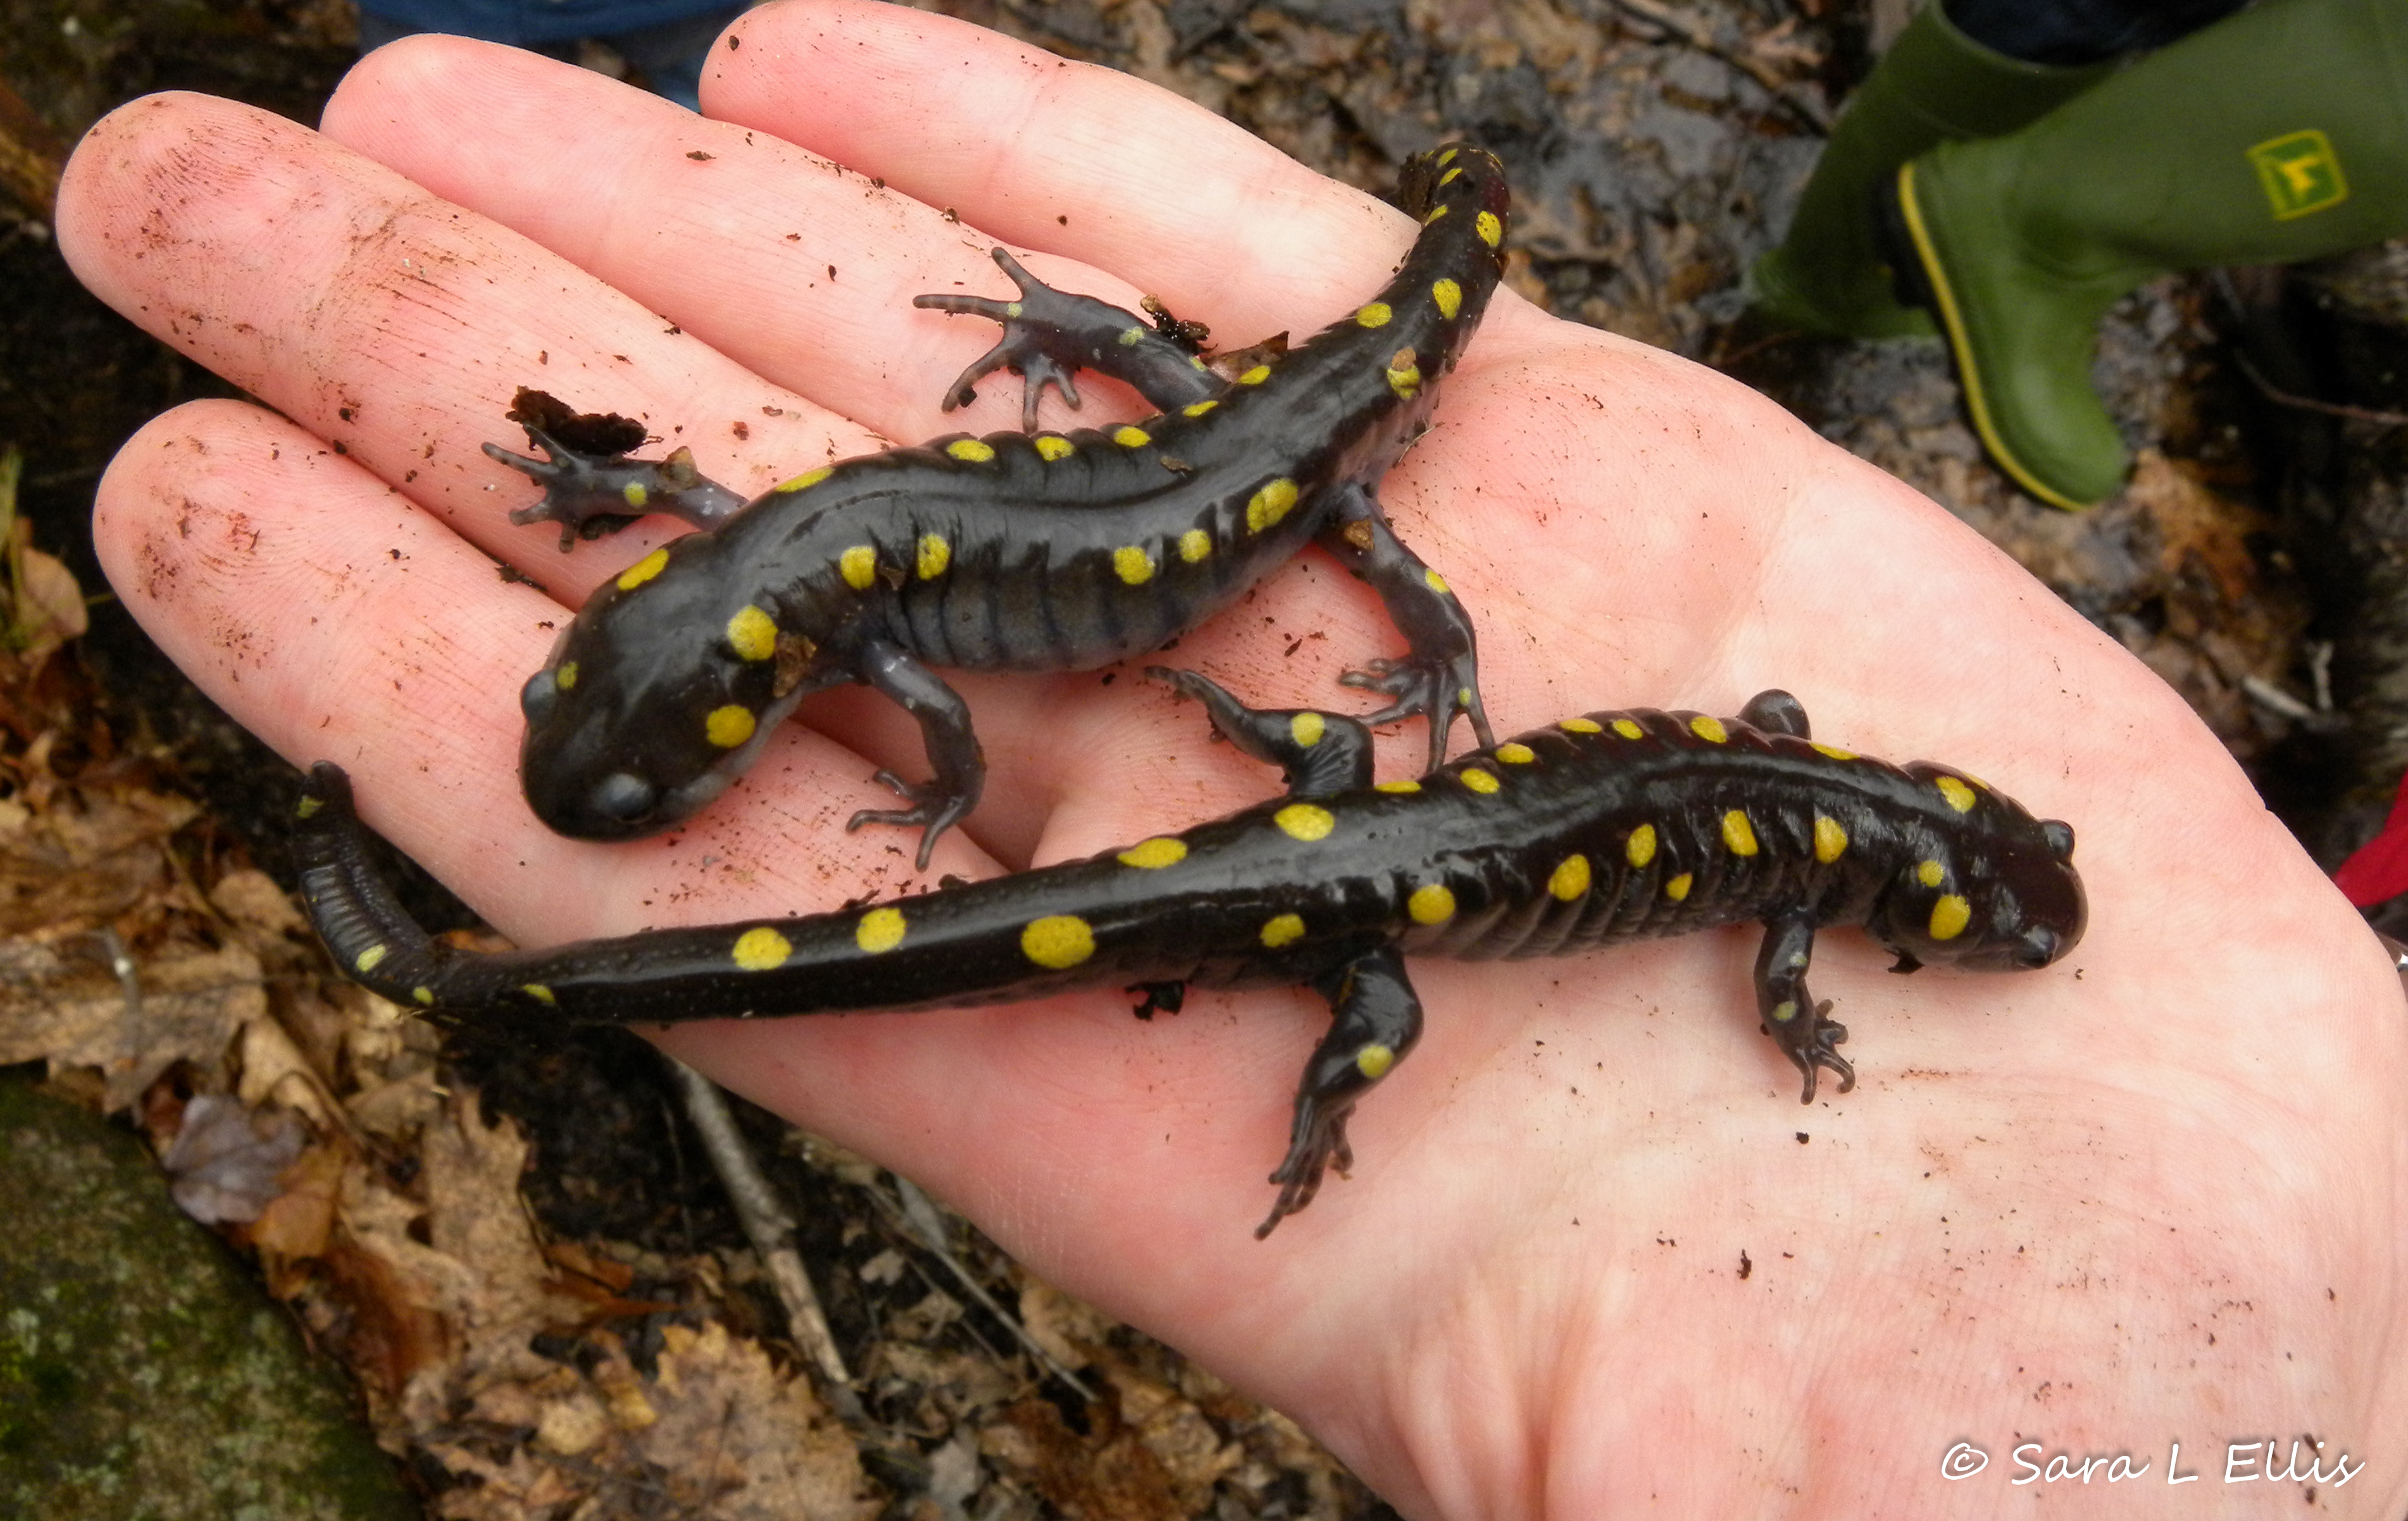 Spotted salamanders in the hand. Photo © Sara L Ellis.